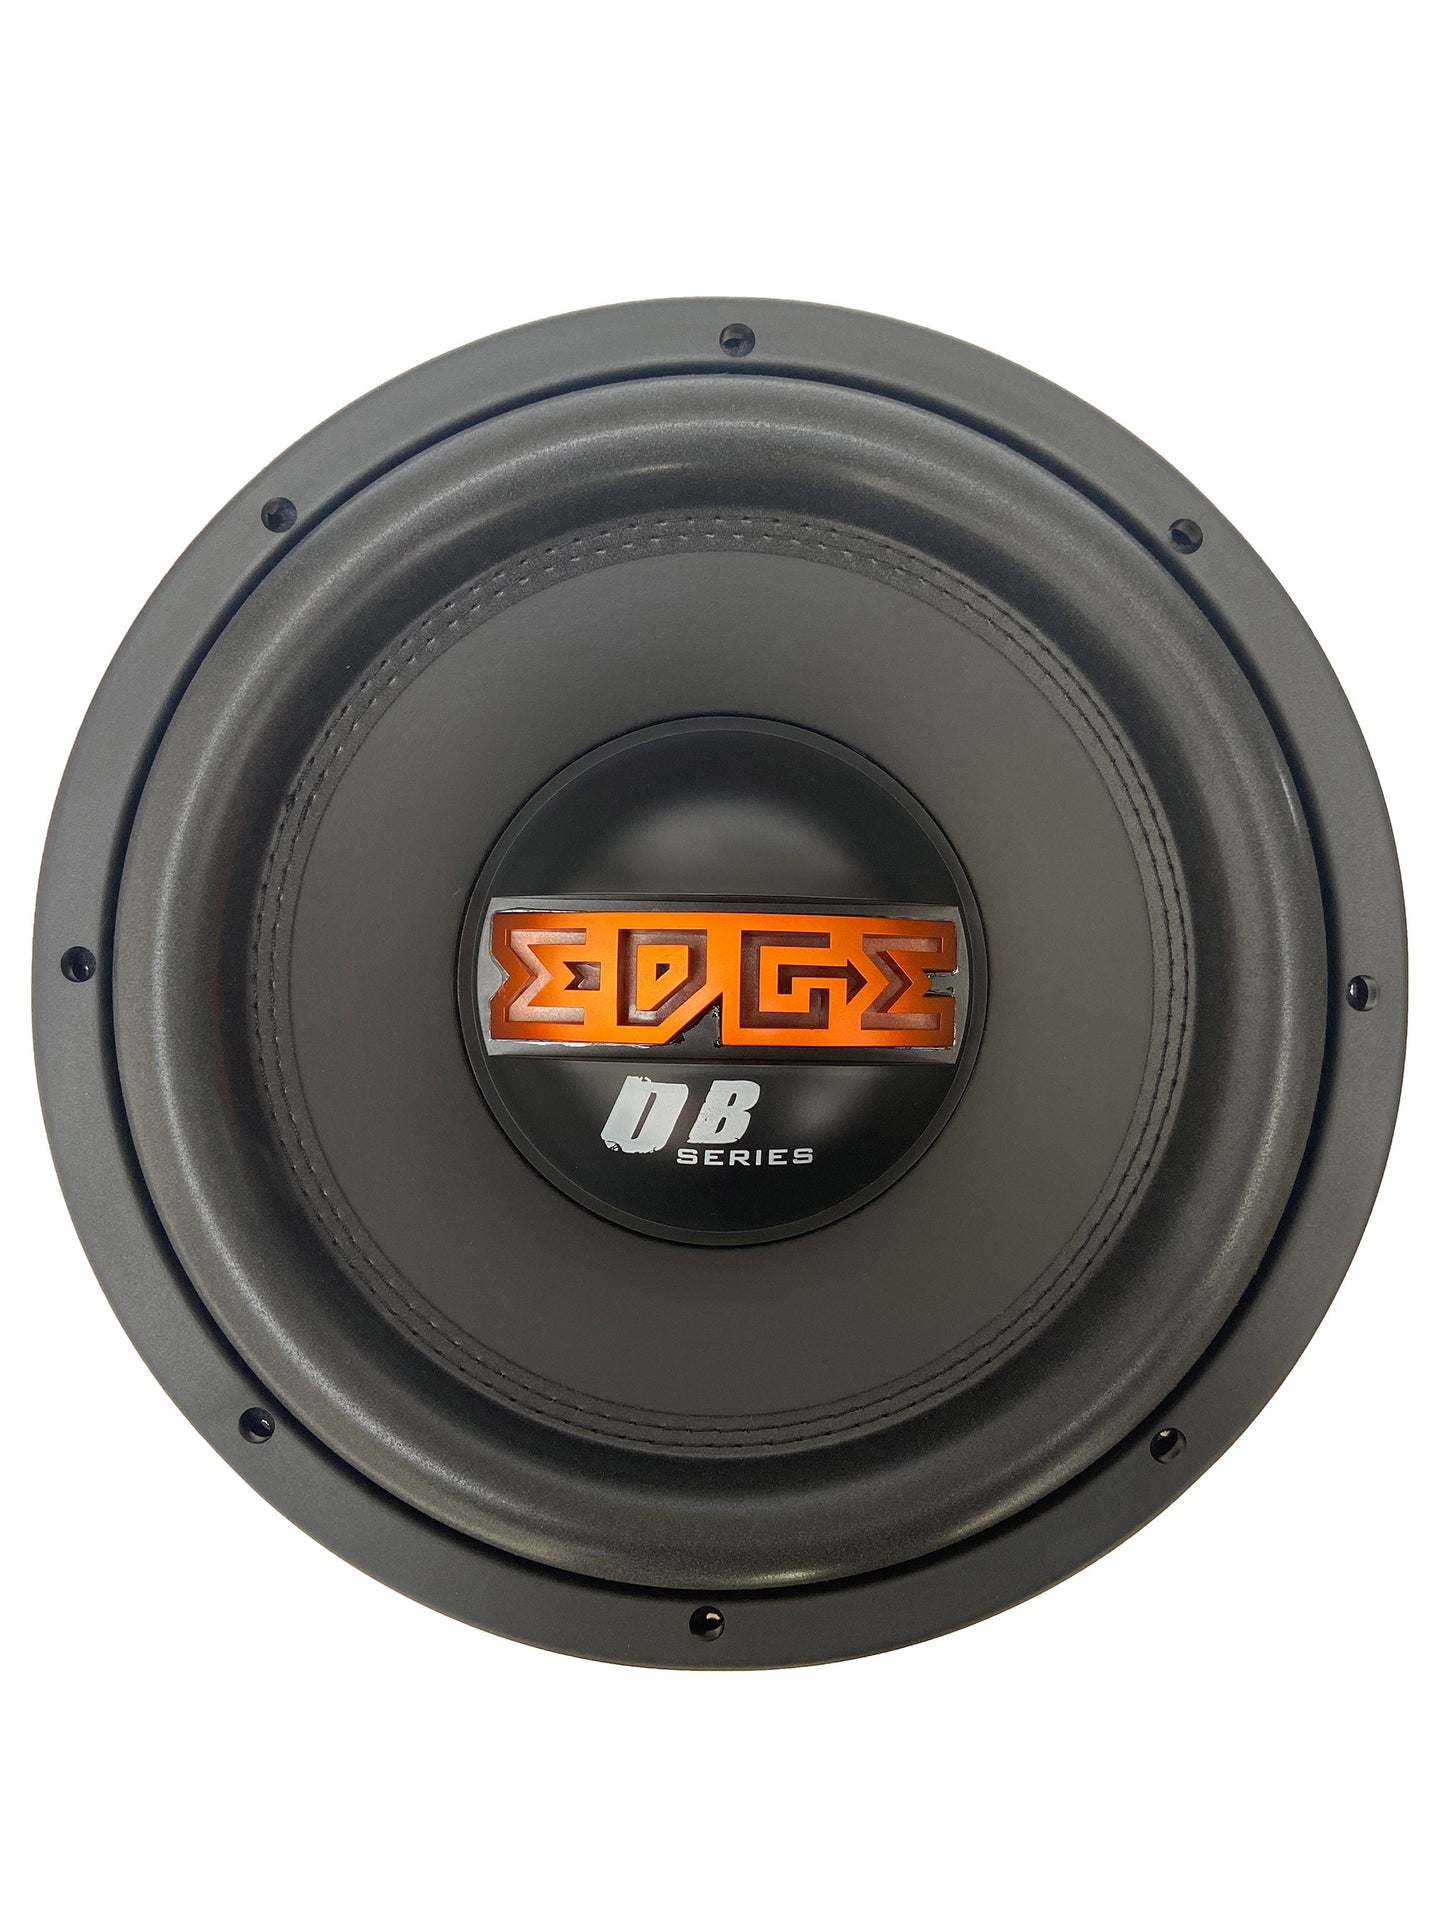 EDB12D2-E0 | EDGE DB Series 12 inch 1200 watts Subwoofer